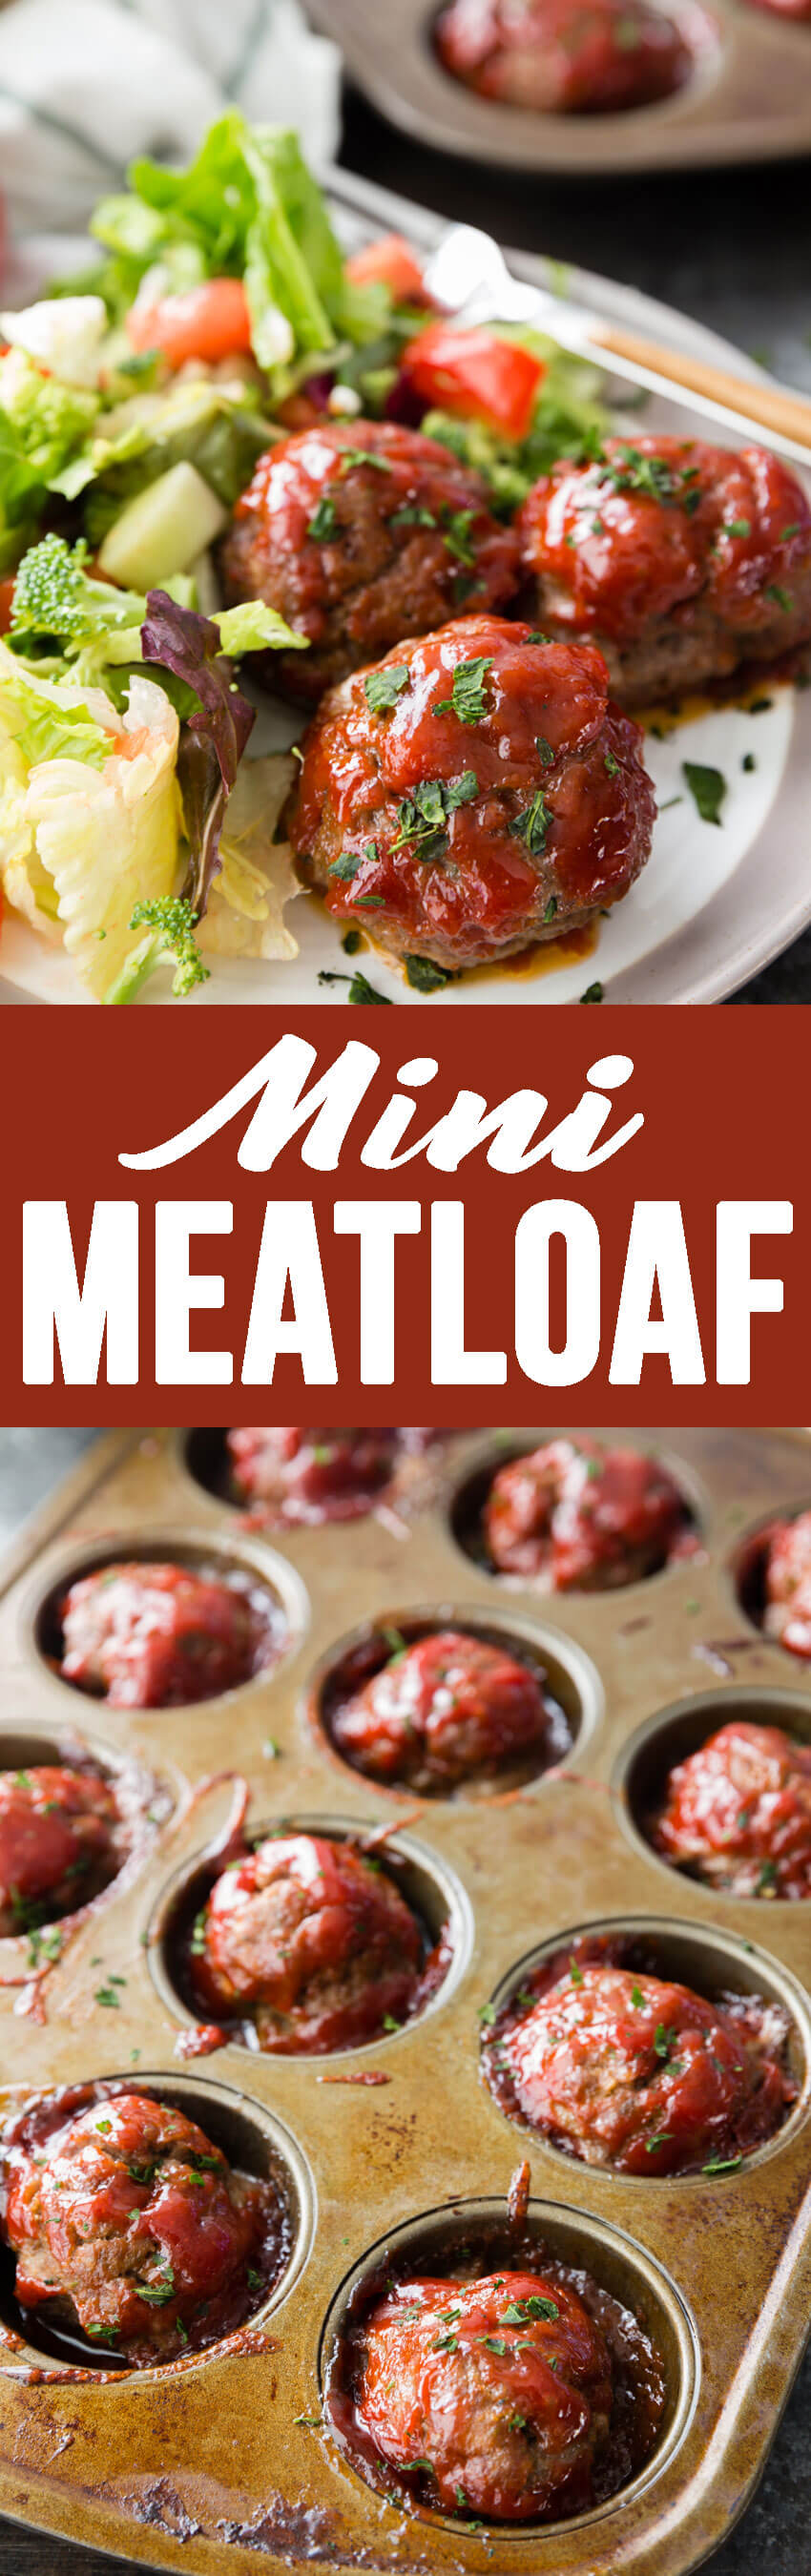 https://www.eazypeazymealz.com/wp-content/uploads/2016/06/Mini-Meatloaf-PIN.jpg